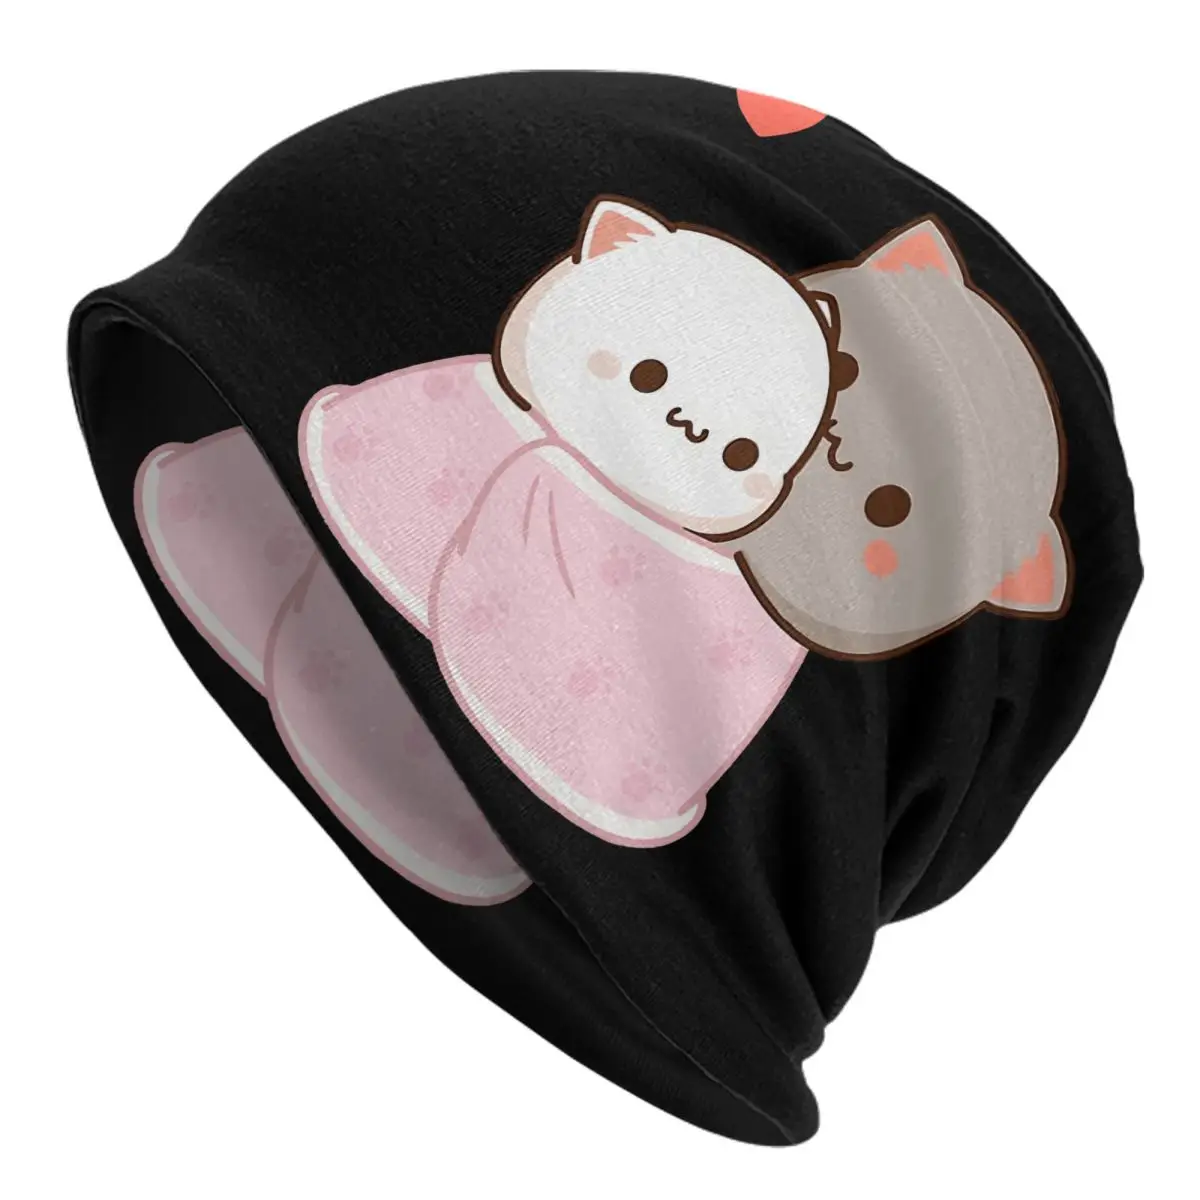 Peach And Goma Cuddling - Mochi Peach Cat Caps Men Women Unisex Streetwear Winter Warm Knit Hat Adult funny Hats